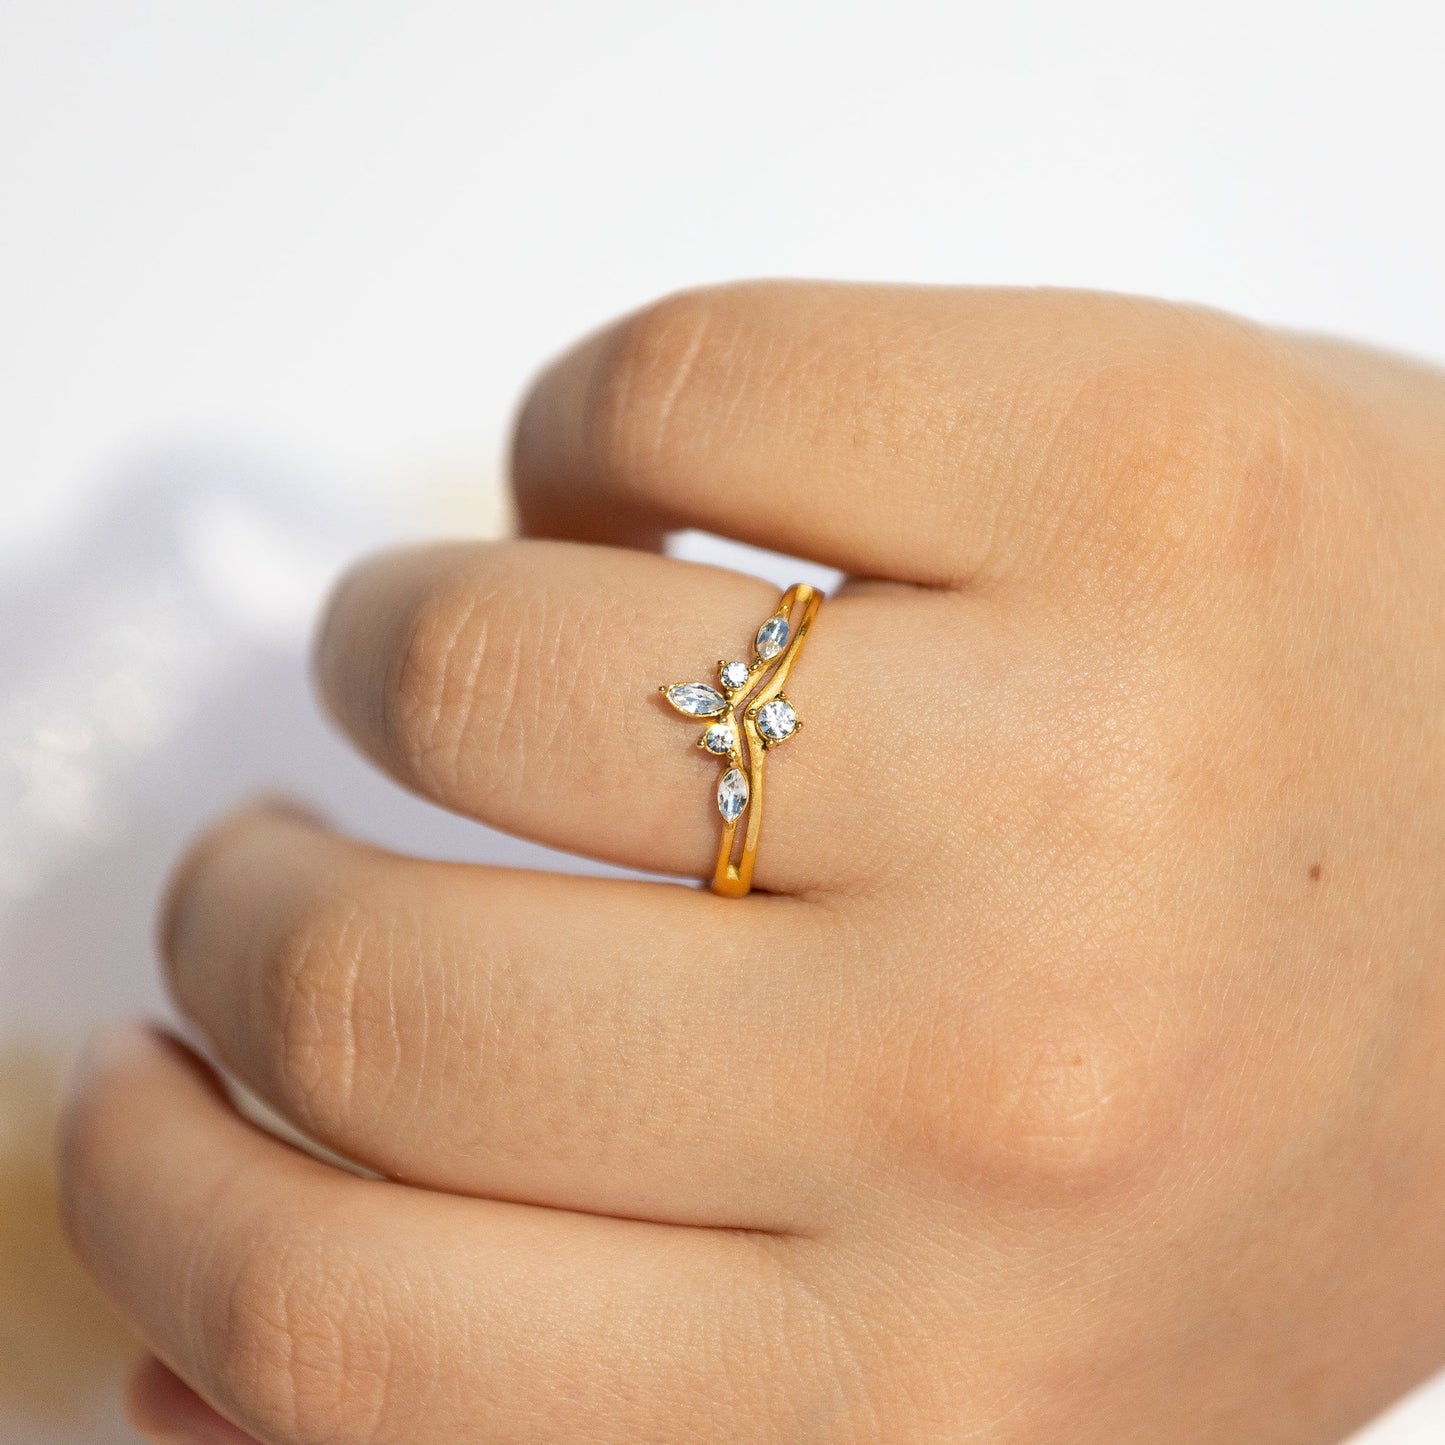 18k vergoldeter Ring Prinzessin Verstellbar - NONOSH